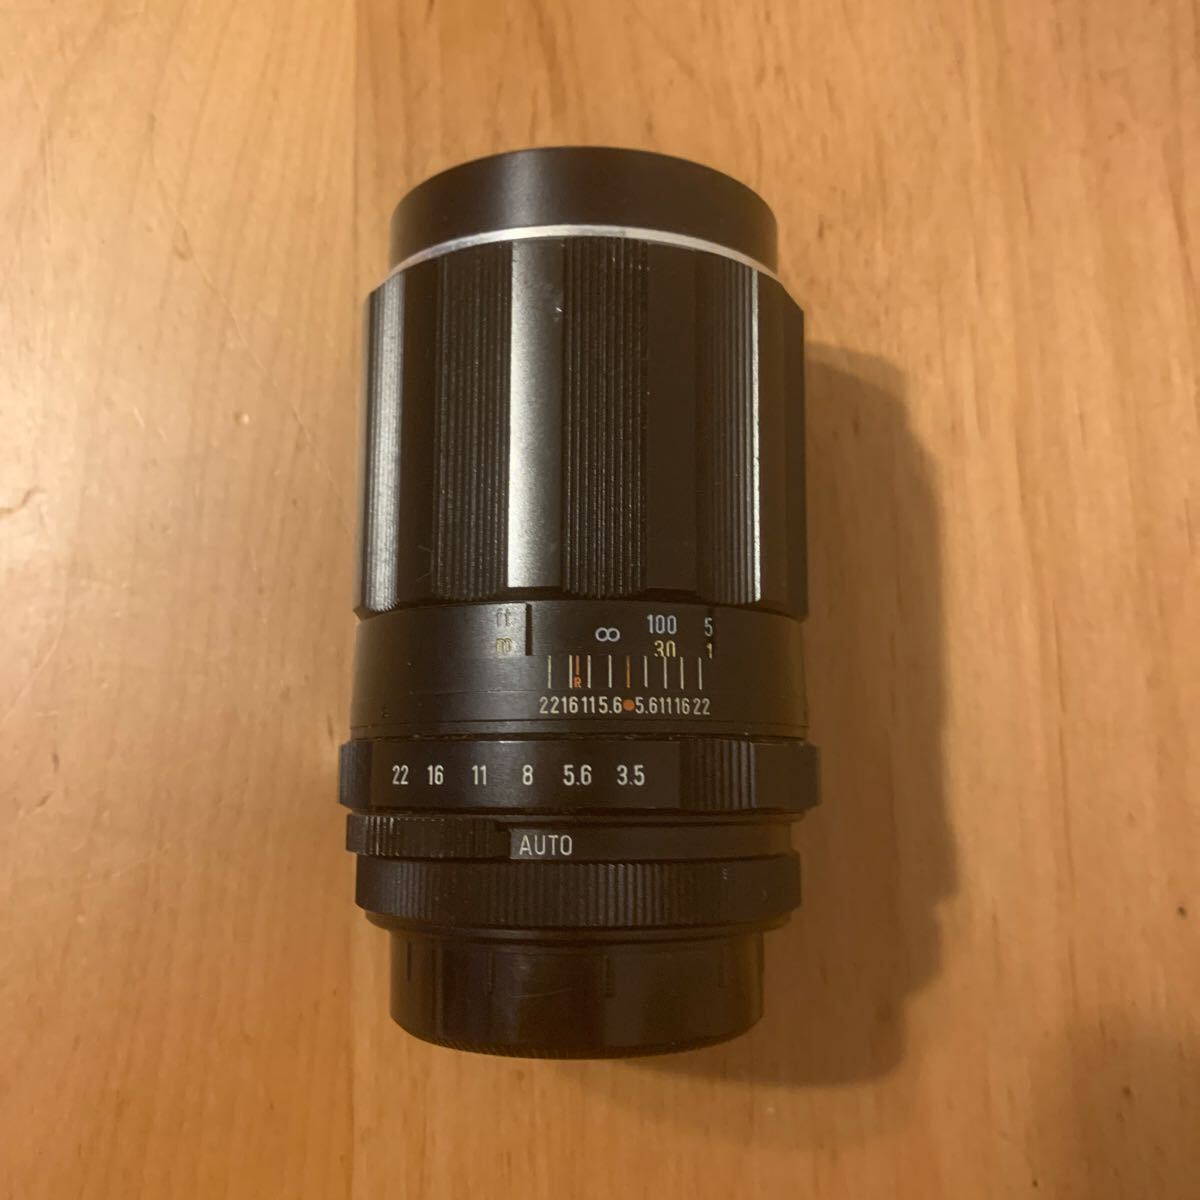 Super-Takumar 1:3.5/135 2031042 Asahi Opt.Co. Lens made in Japan カメラレンズの画像2